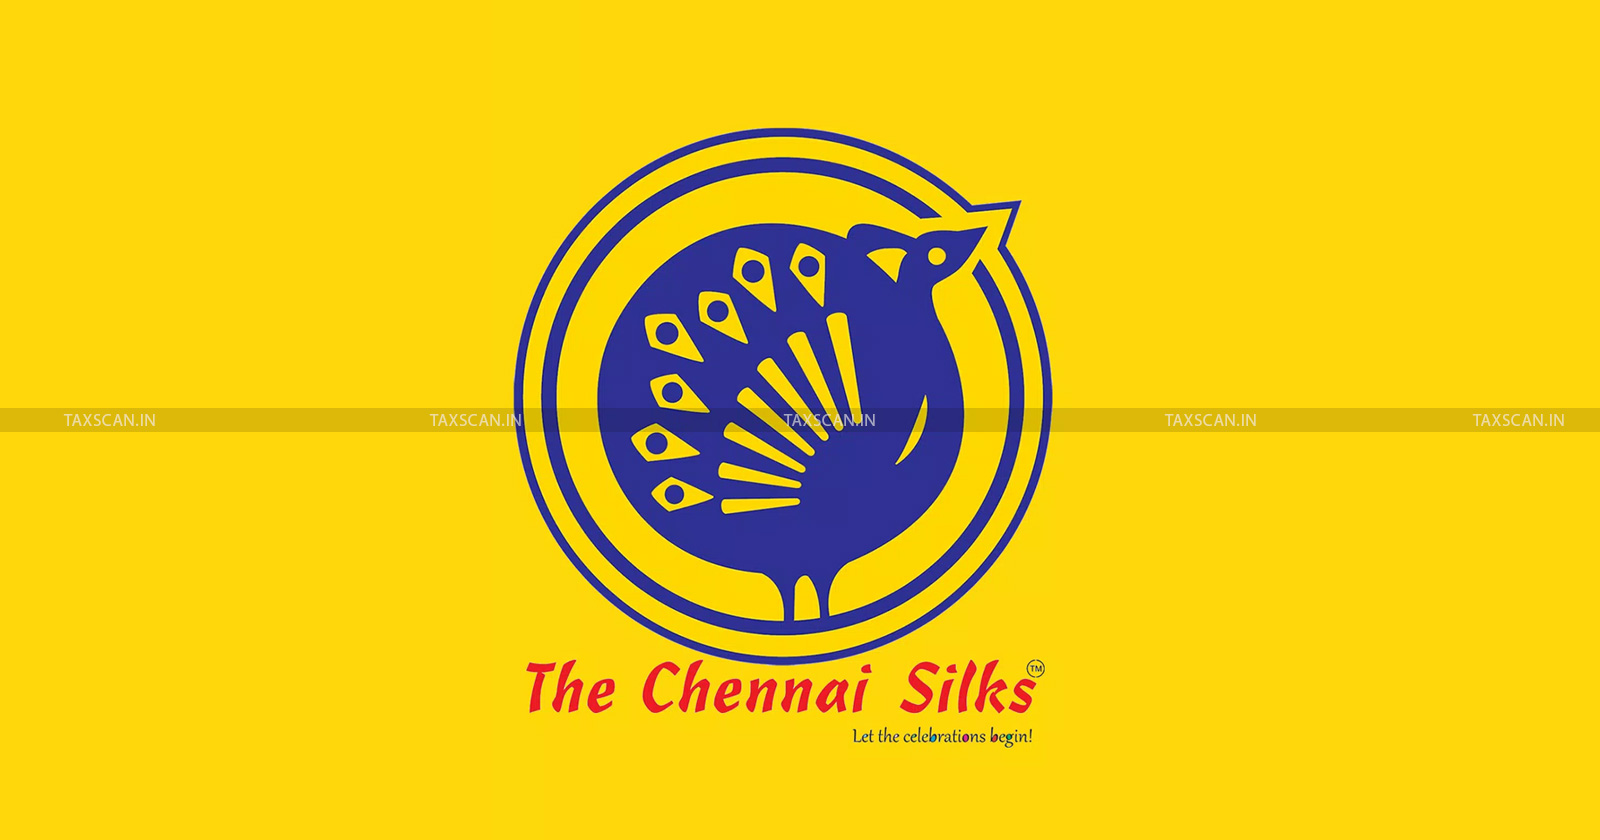 Relief - Chennai Silks - Tax Liability - TNGST Act - Assessment Order - Relief to The Chennai Silks - Tax Liability Determined - Madras HC -taxscan